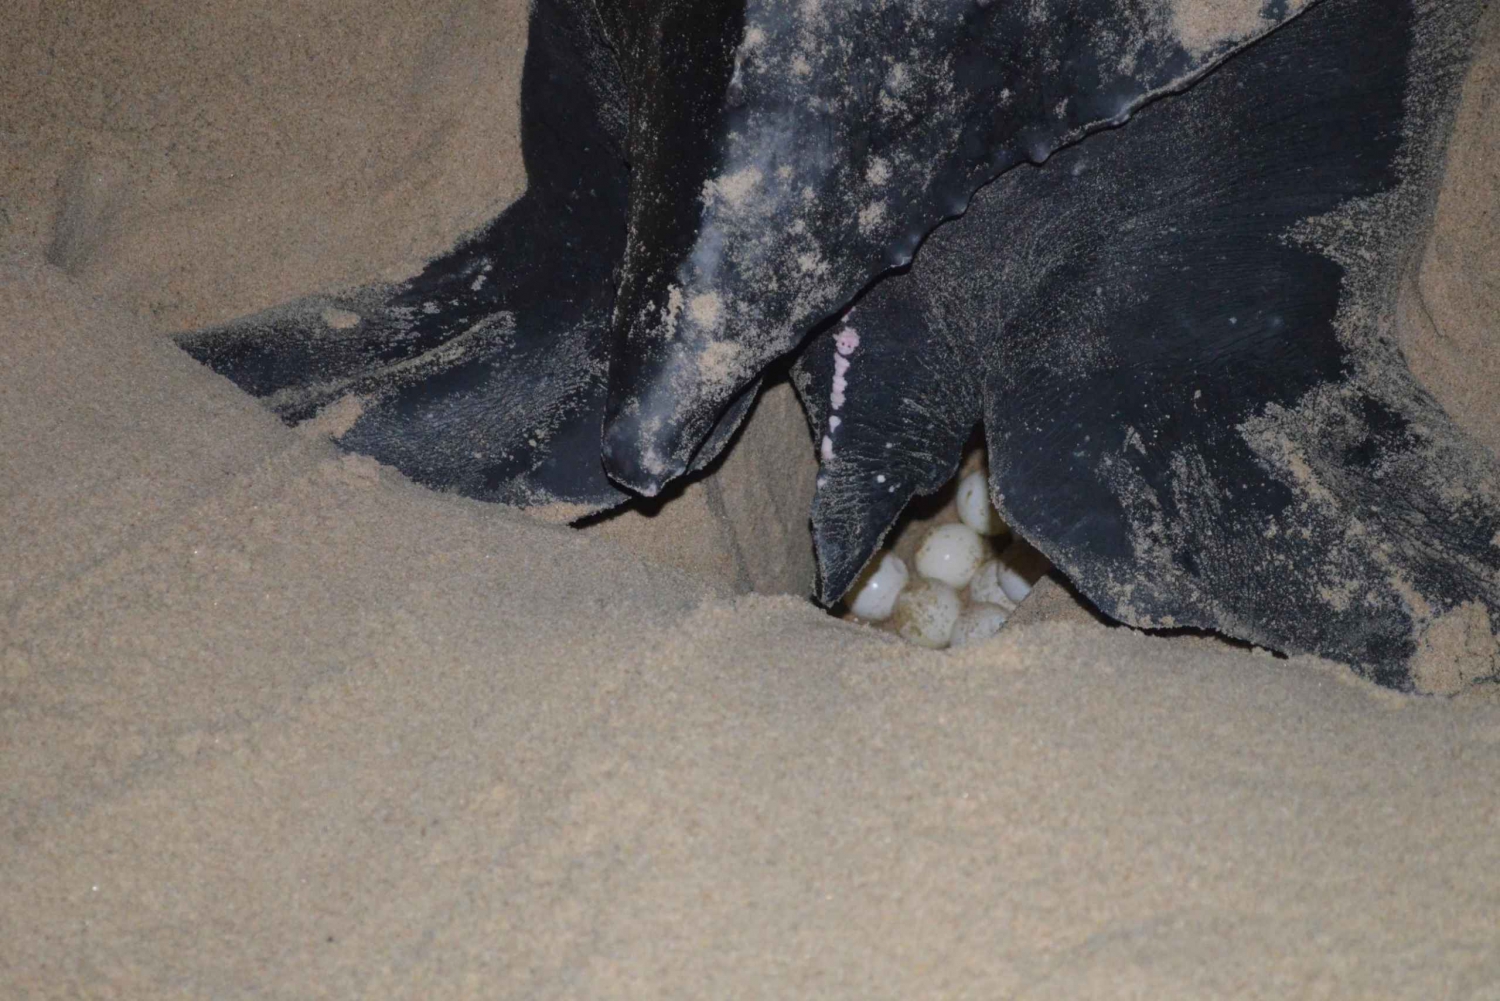 Port of Spain: Matura Beach Turtle Migration Observation